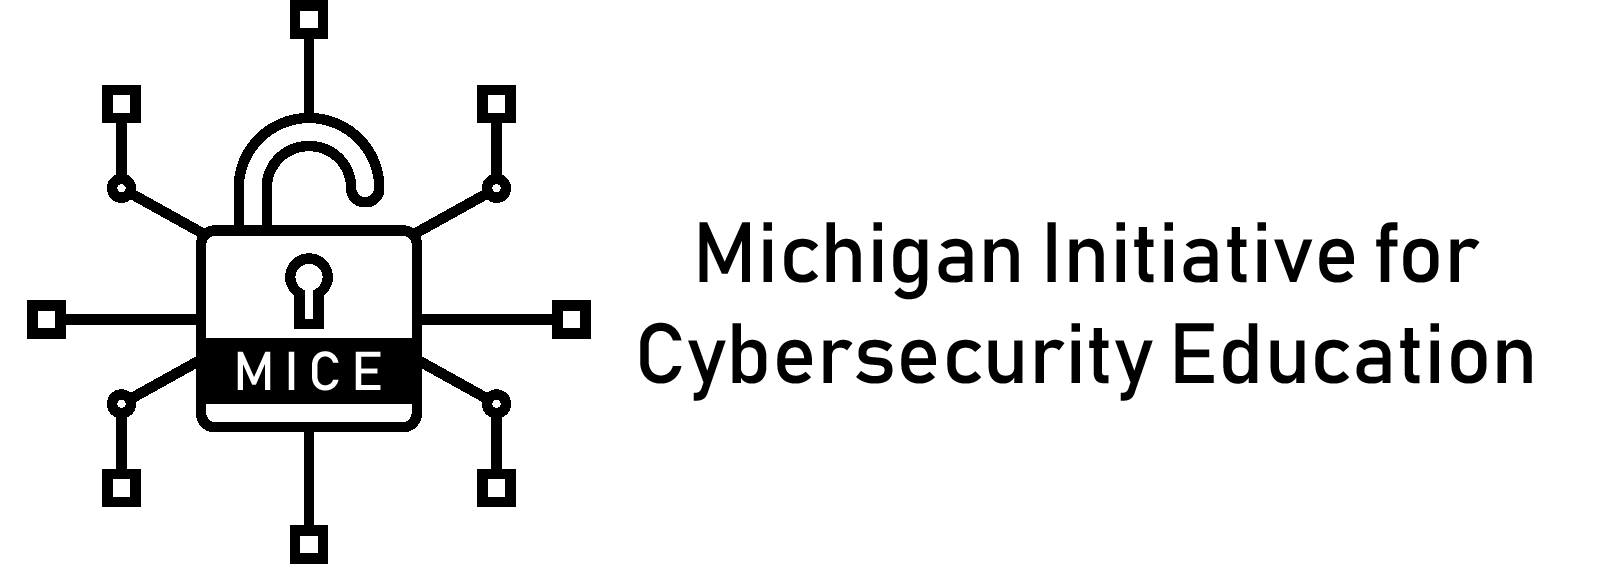 Michigan Initiative for Cybersecurity Education logo